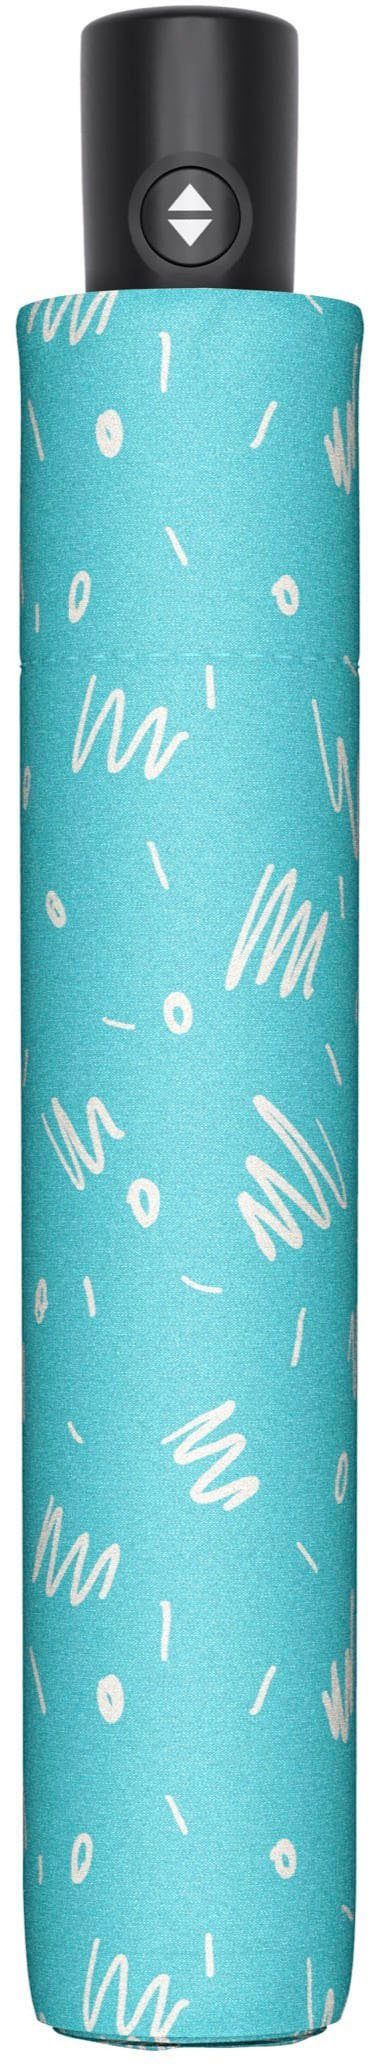 Taschenregenschirm doppler® Minimally, aqua zero blue Magic